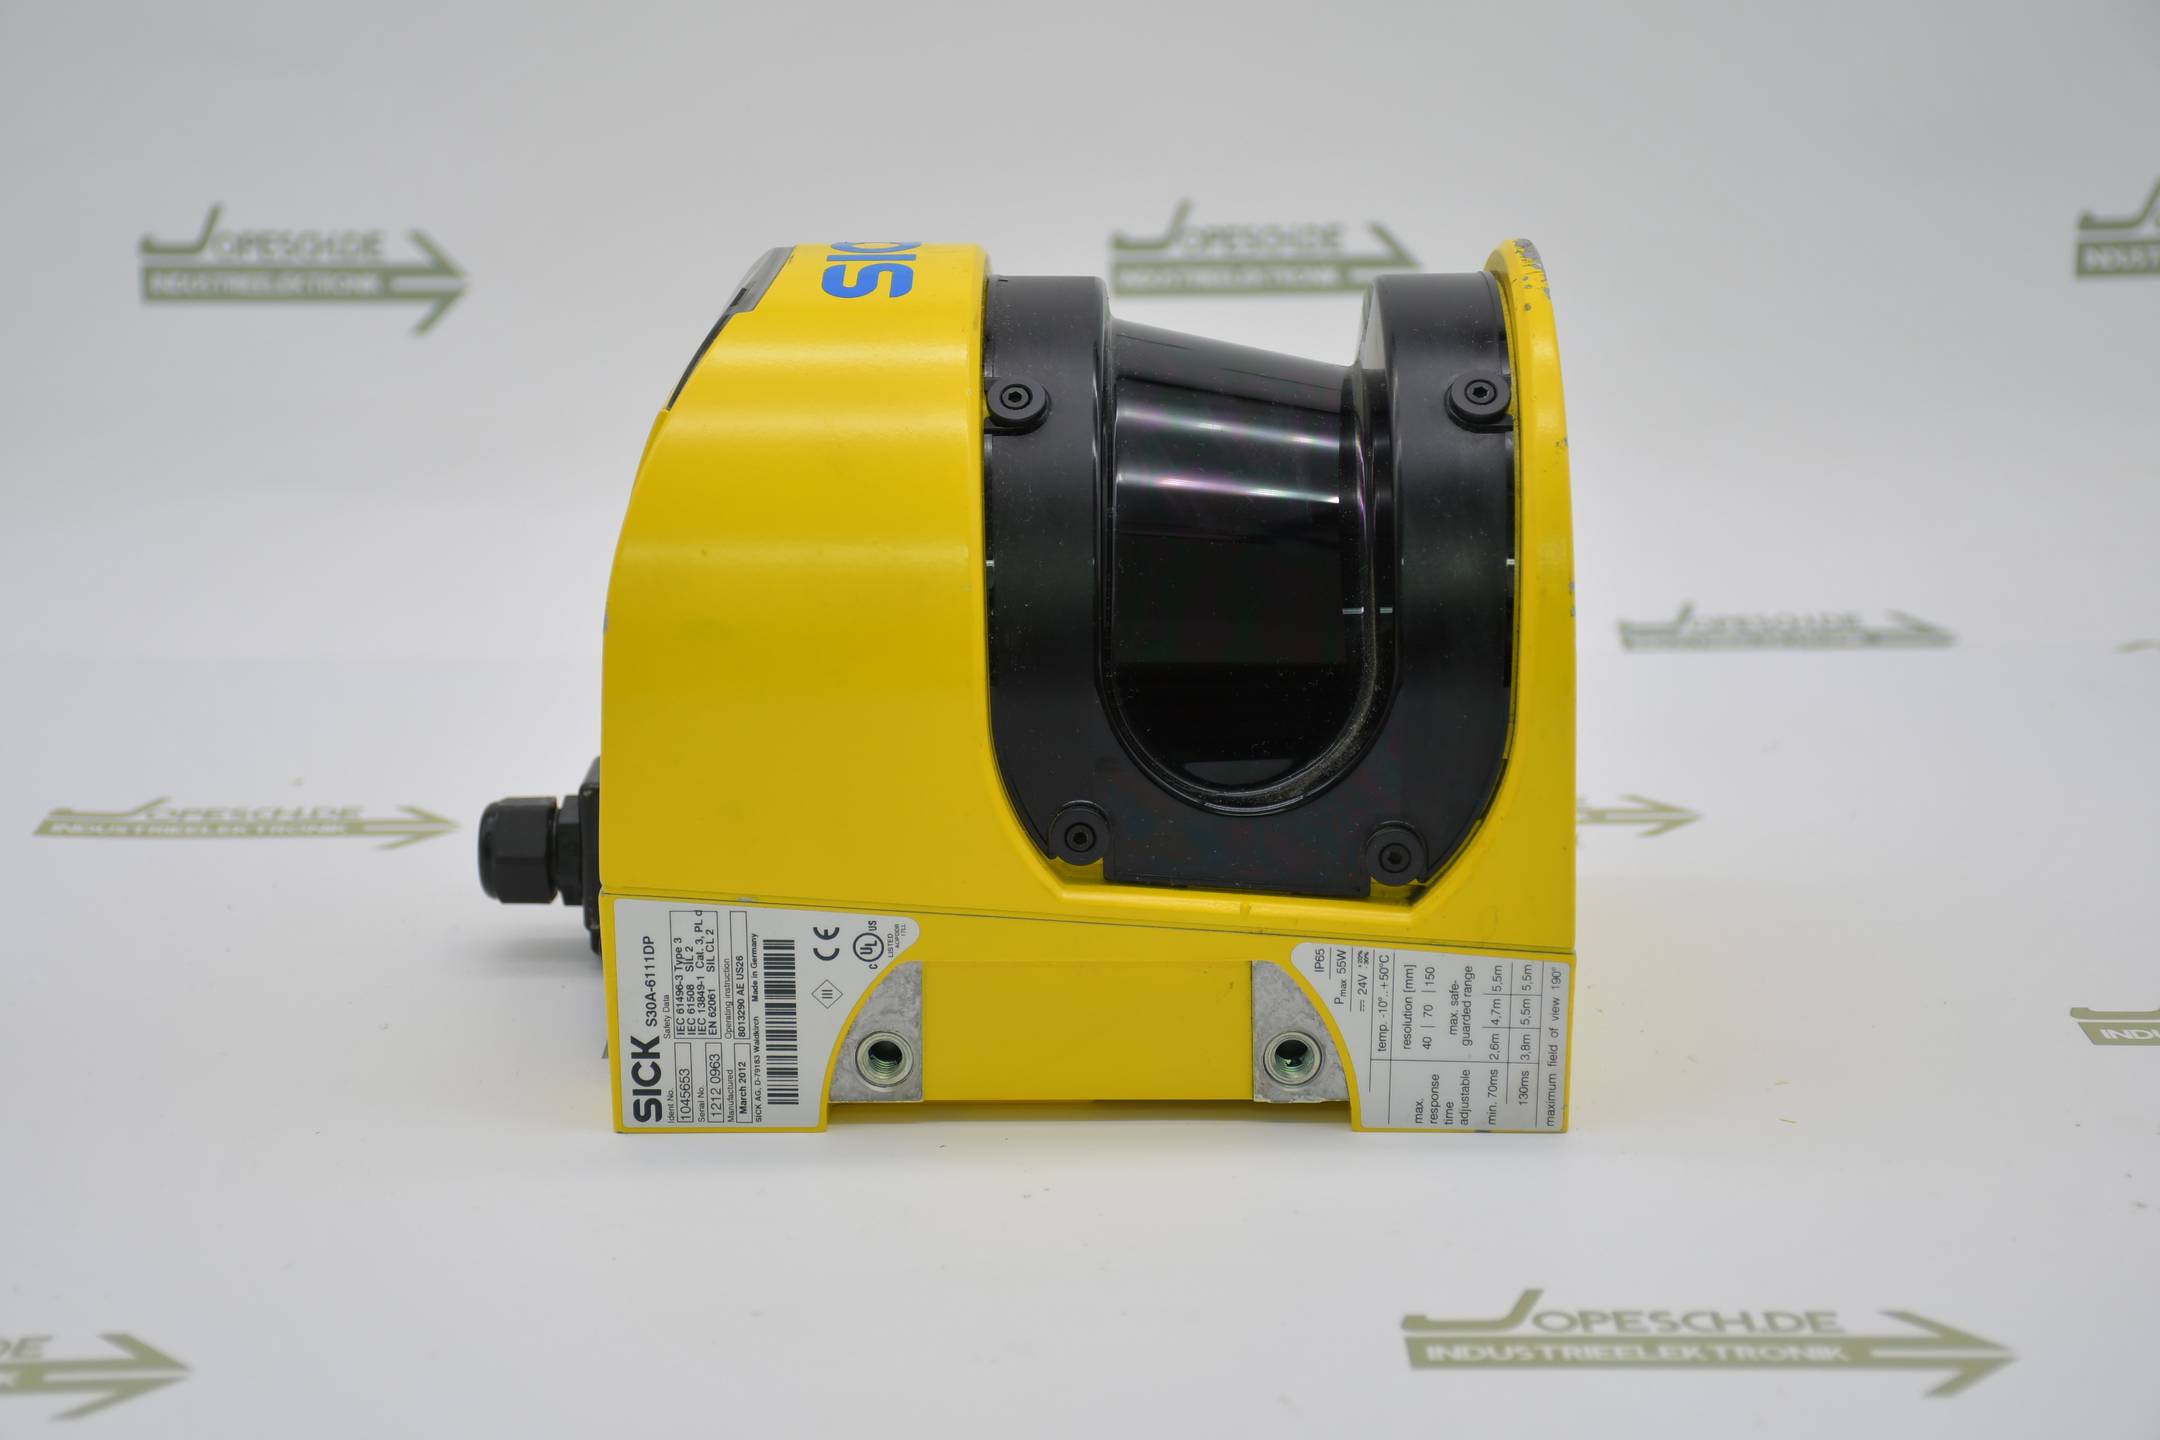 SICK safety laser scanner S3000 Profinet IO Professional S30A-6111DP ( 1045653 )